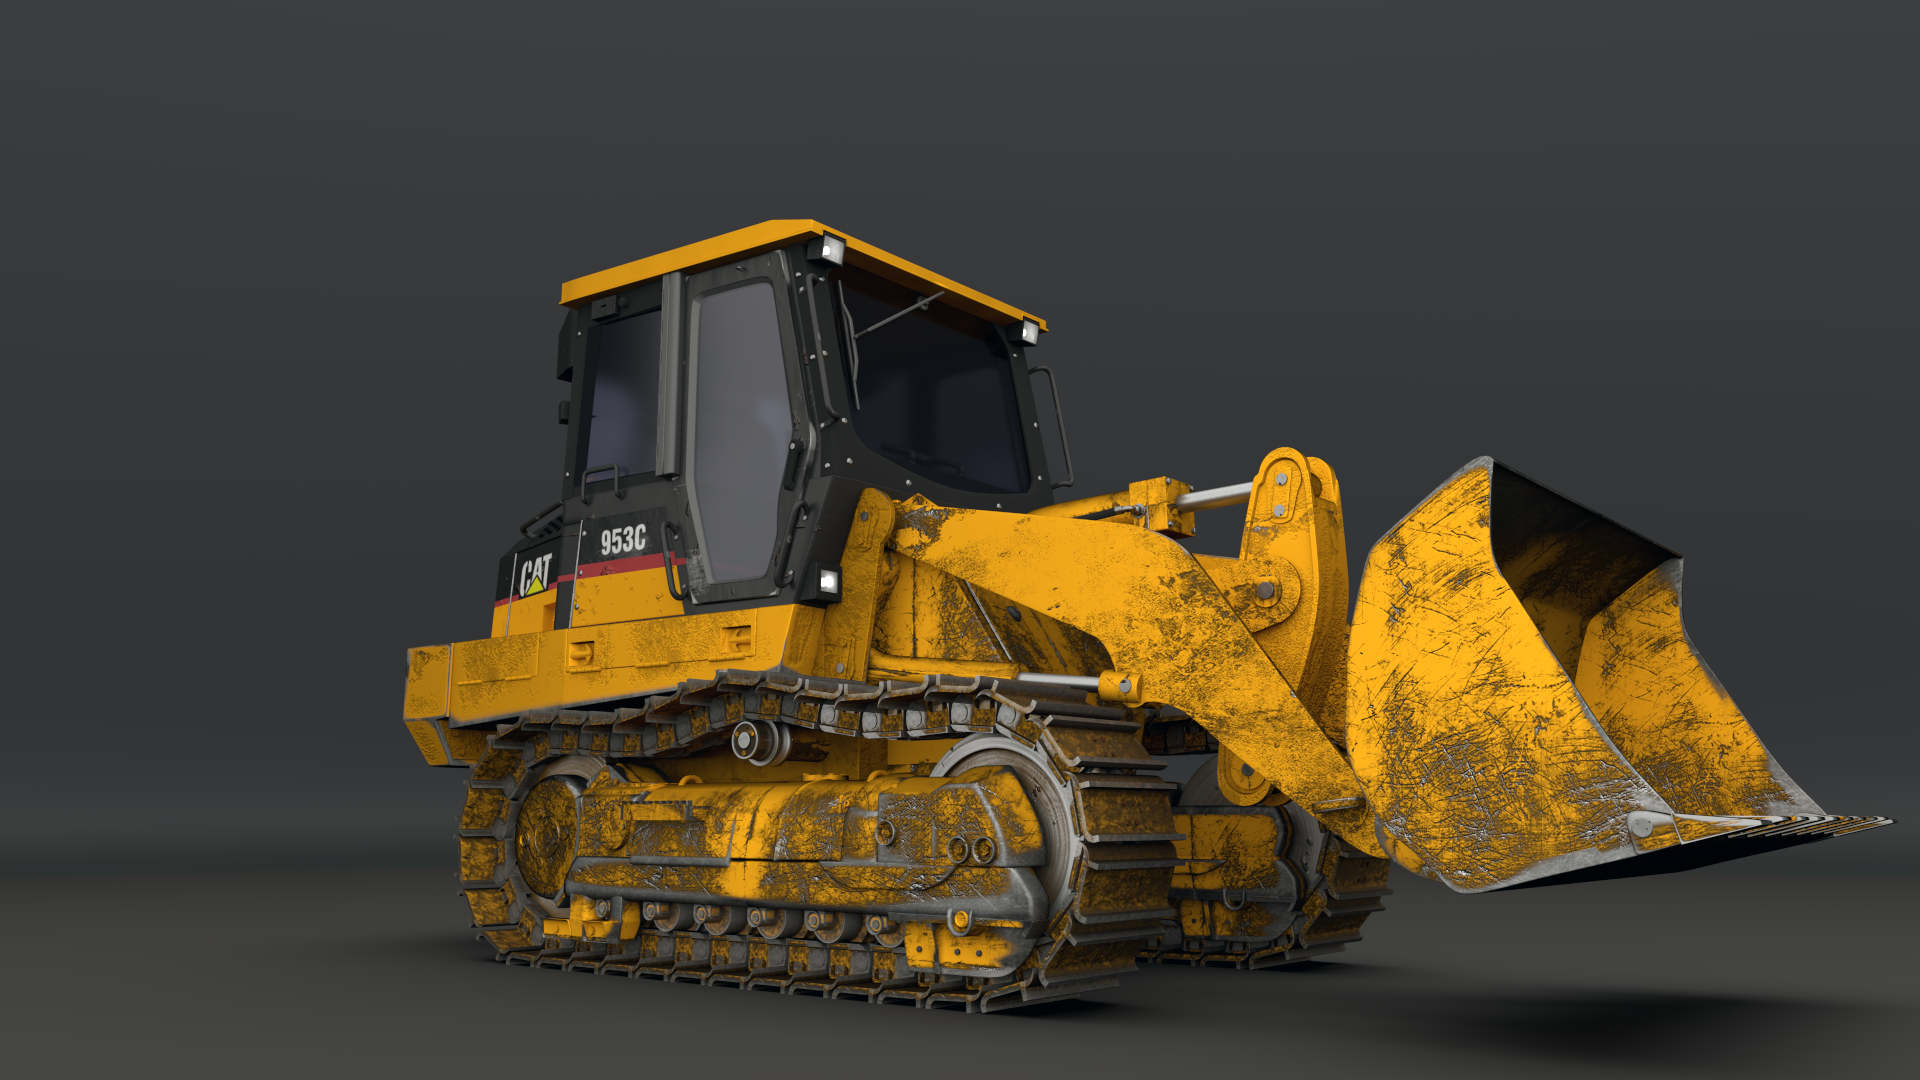 General 1920x1080 bulldozer CGI heavy equipment excavators vehicle simple background numbers gray background